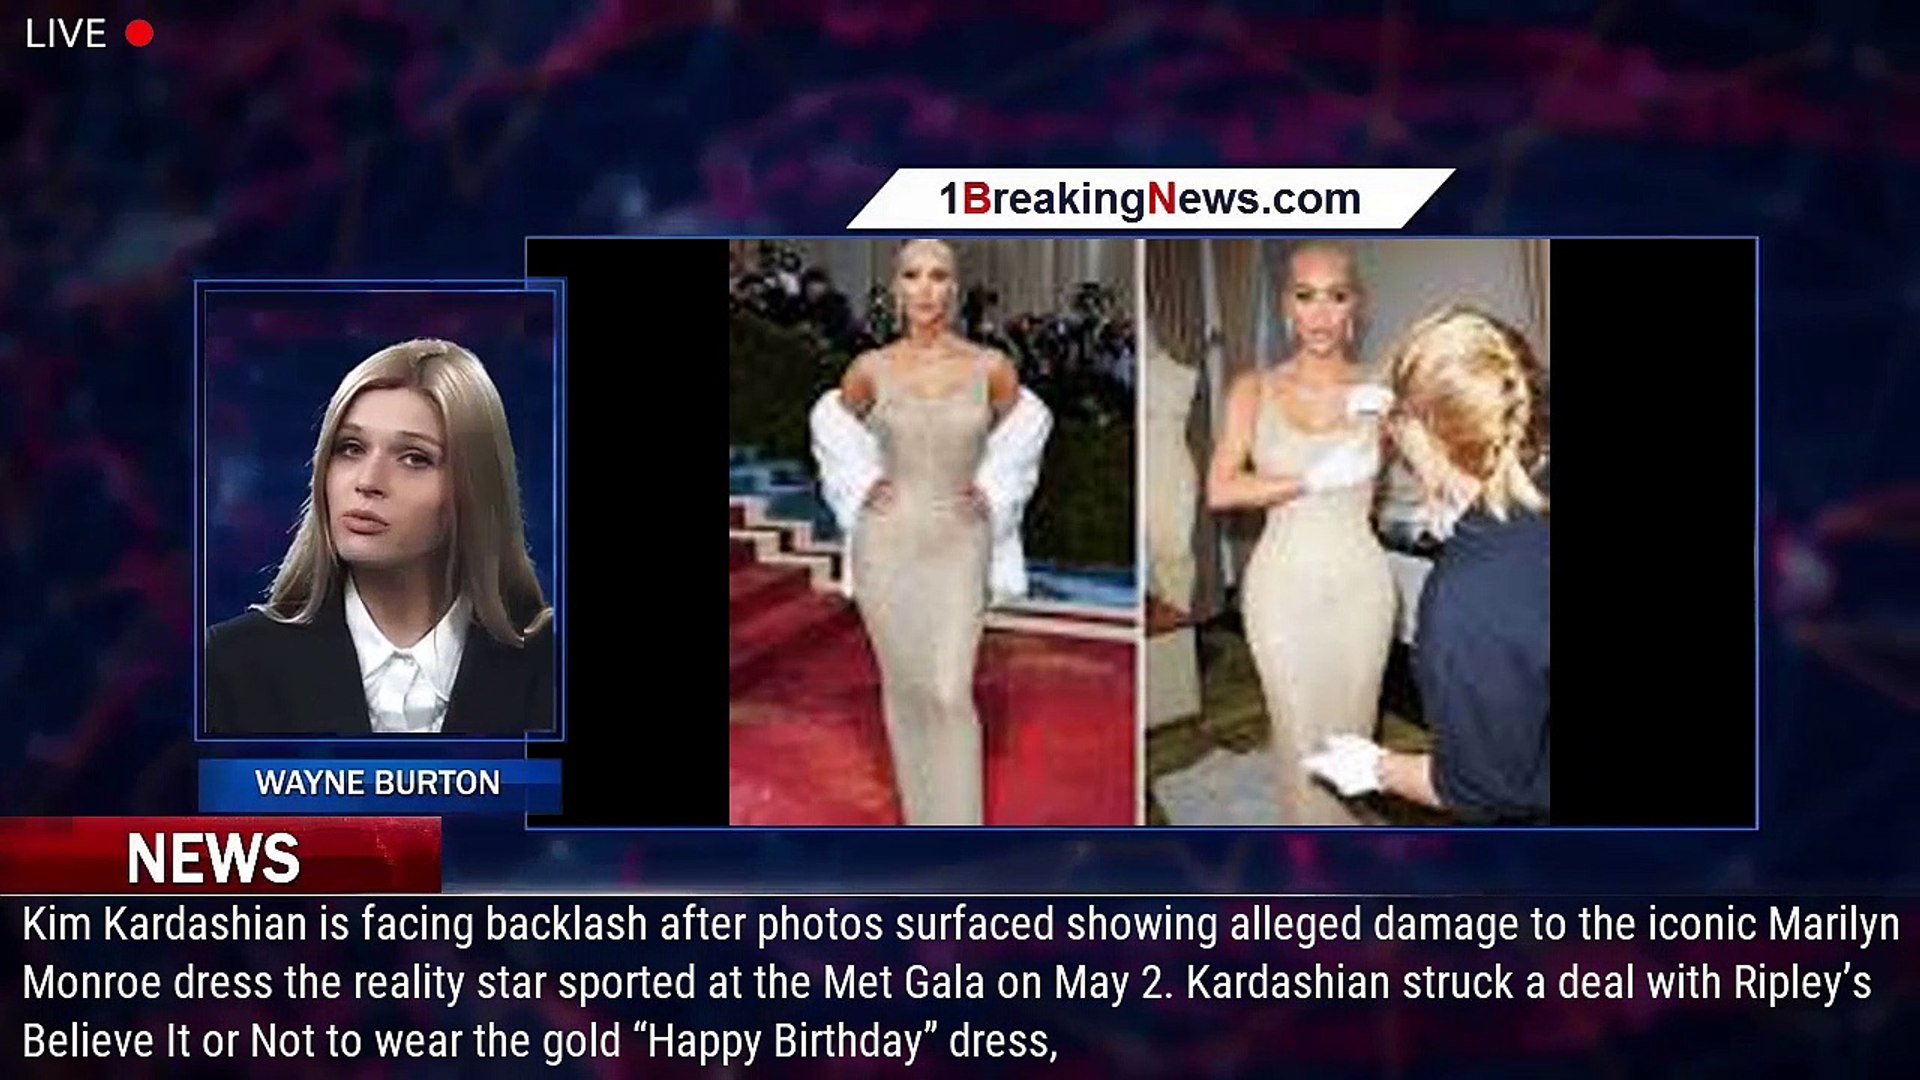 Kim Kardashian Accused of Damaging Marilyn Monroe Dress Worn at Met Gala -  1breakingnews.com - video Dailymotion